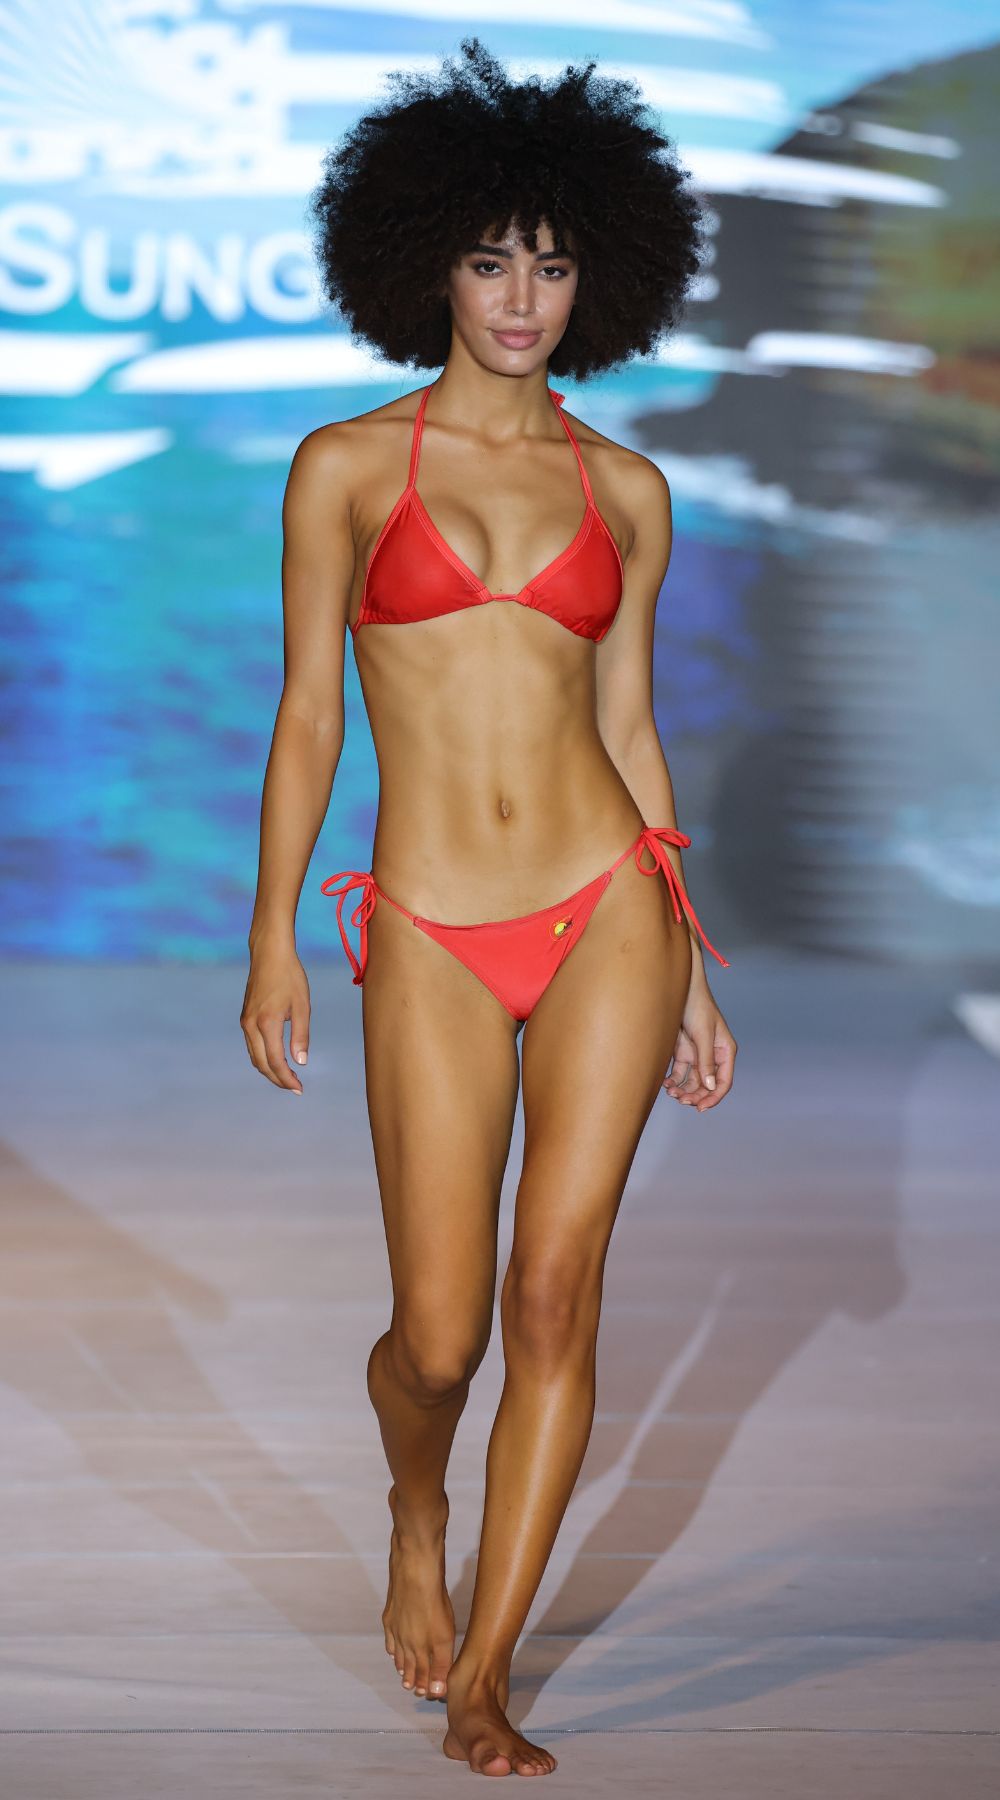 Sunga Life at Miami Swim Week - Red Baewatch Bikini